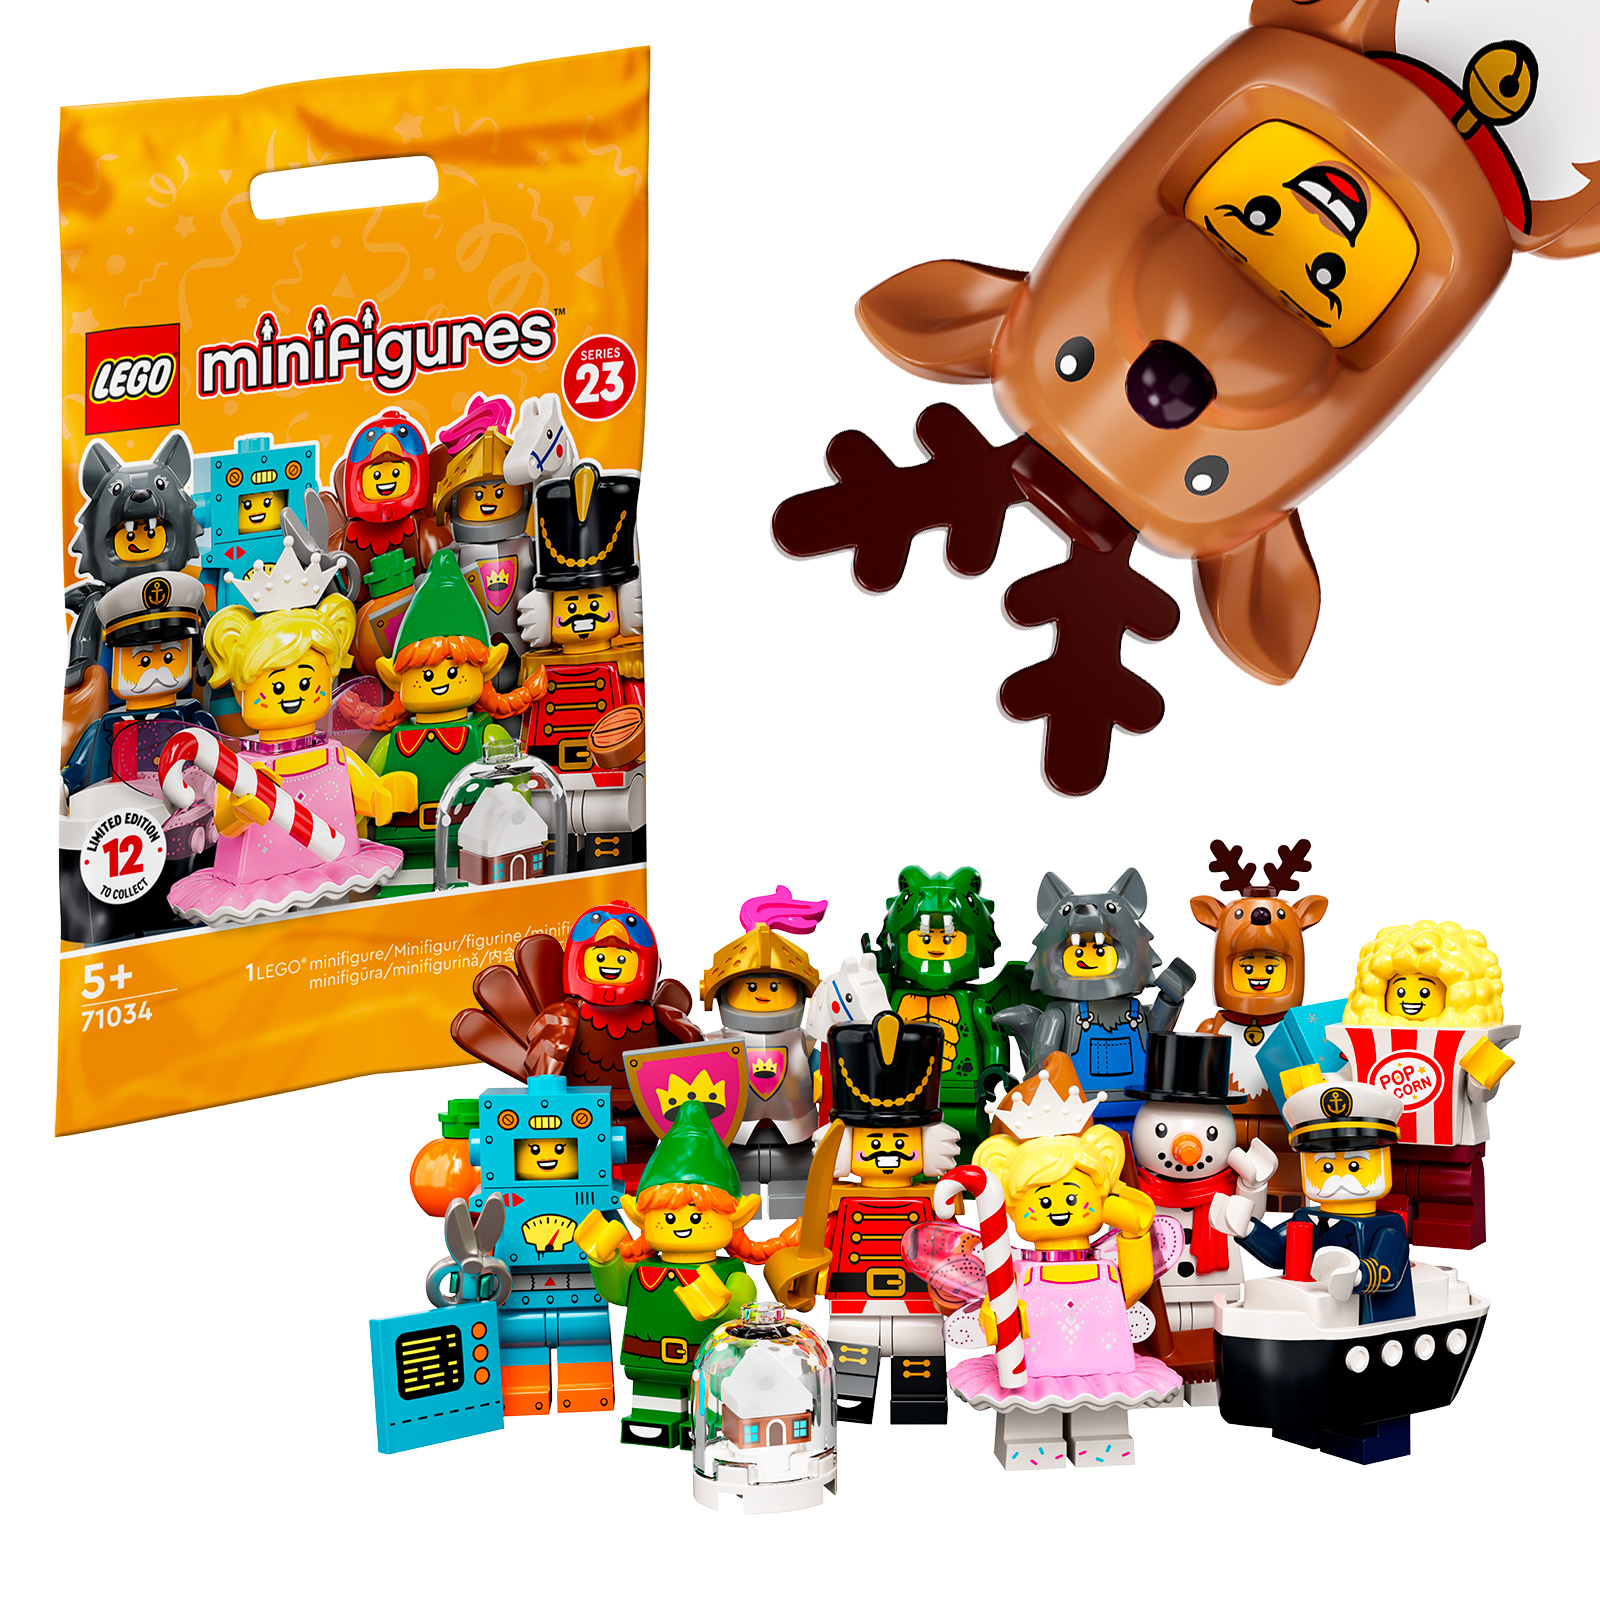 LEGO 71034 Minifigures אספנות סדרה 23: כל הדמויות נמצאות בחנות